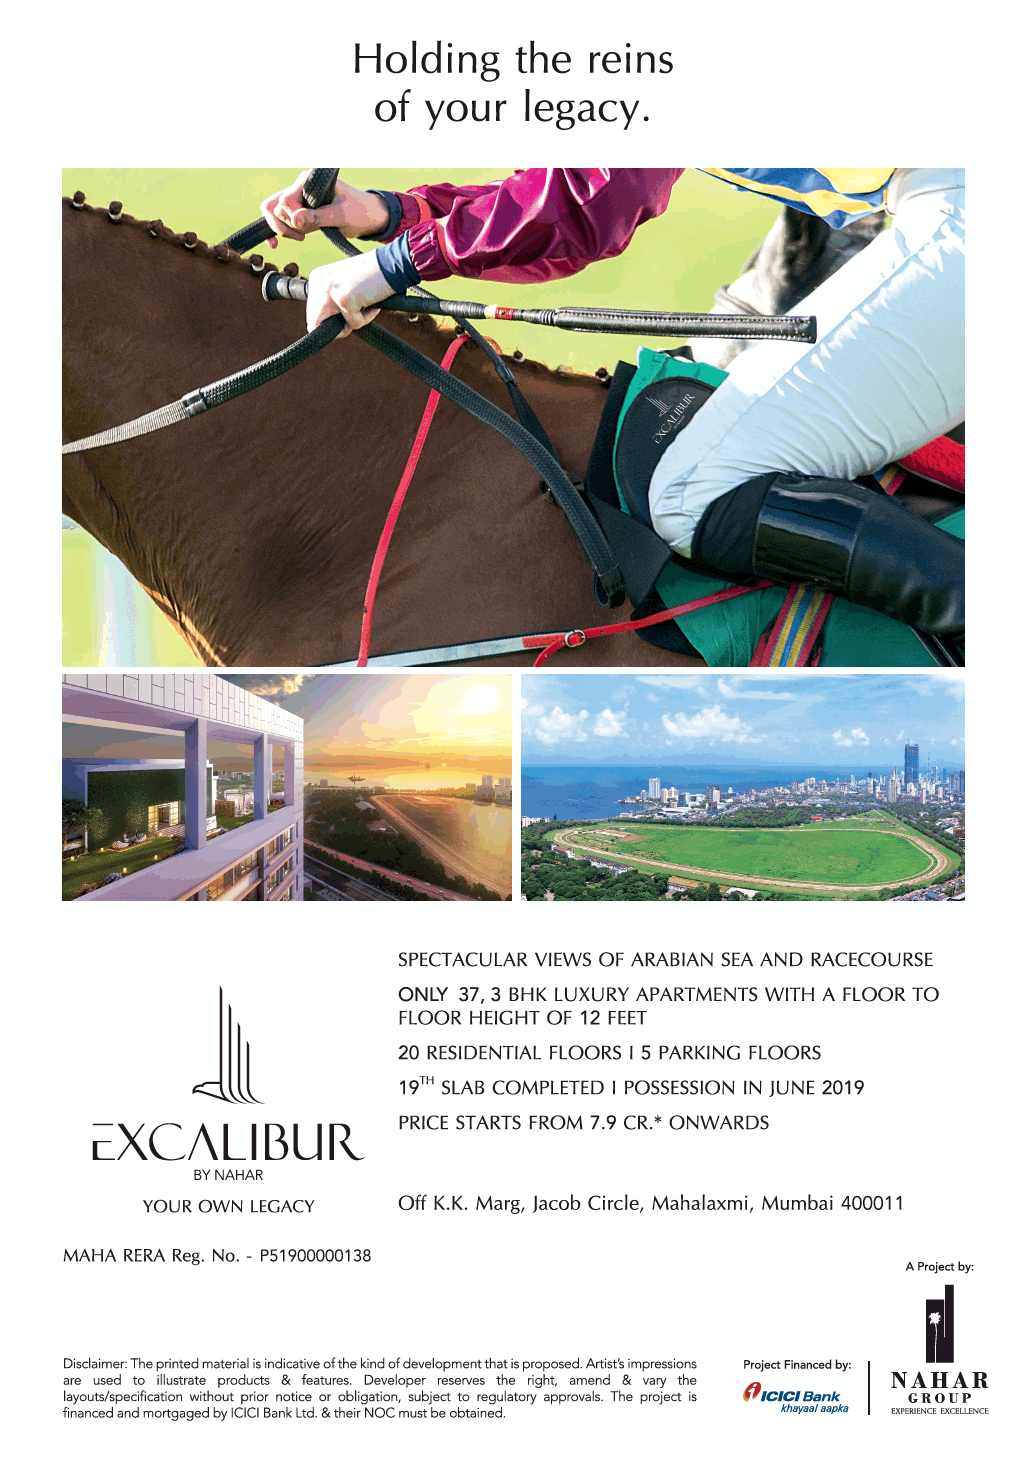 Enjoy the spectacular views of the Arabian Sea & race course at Nahar Excalibur in Mumbai Update